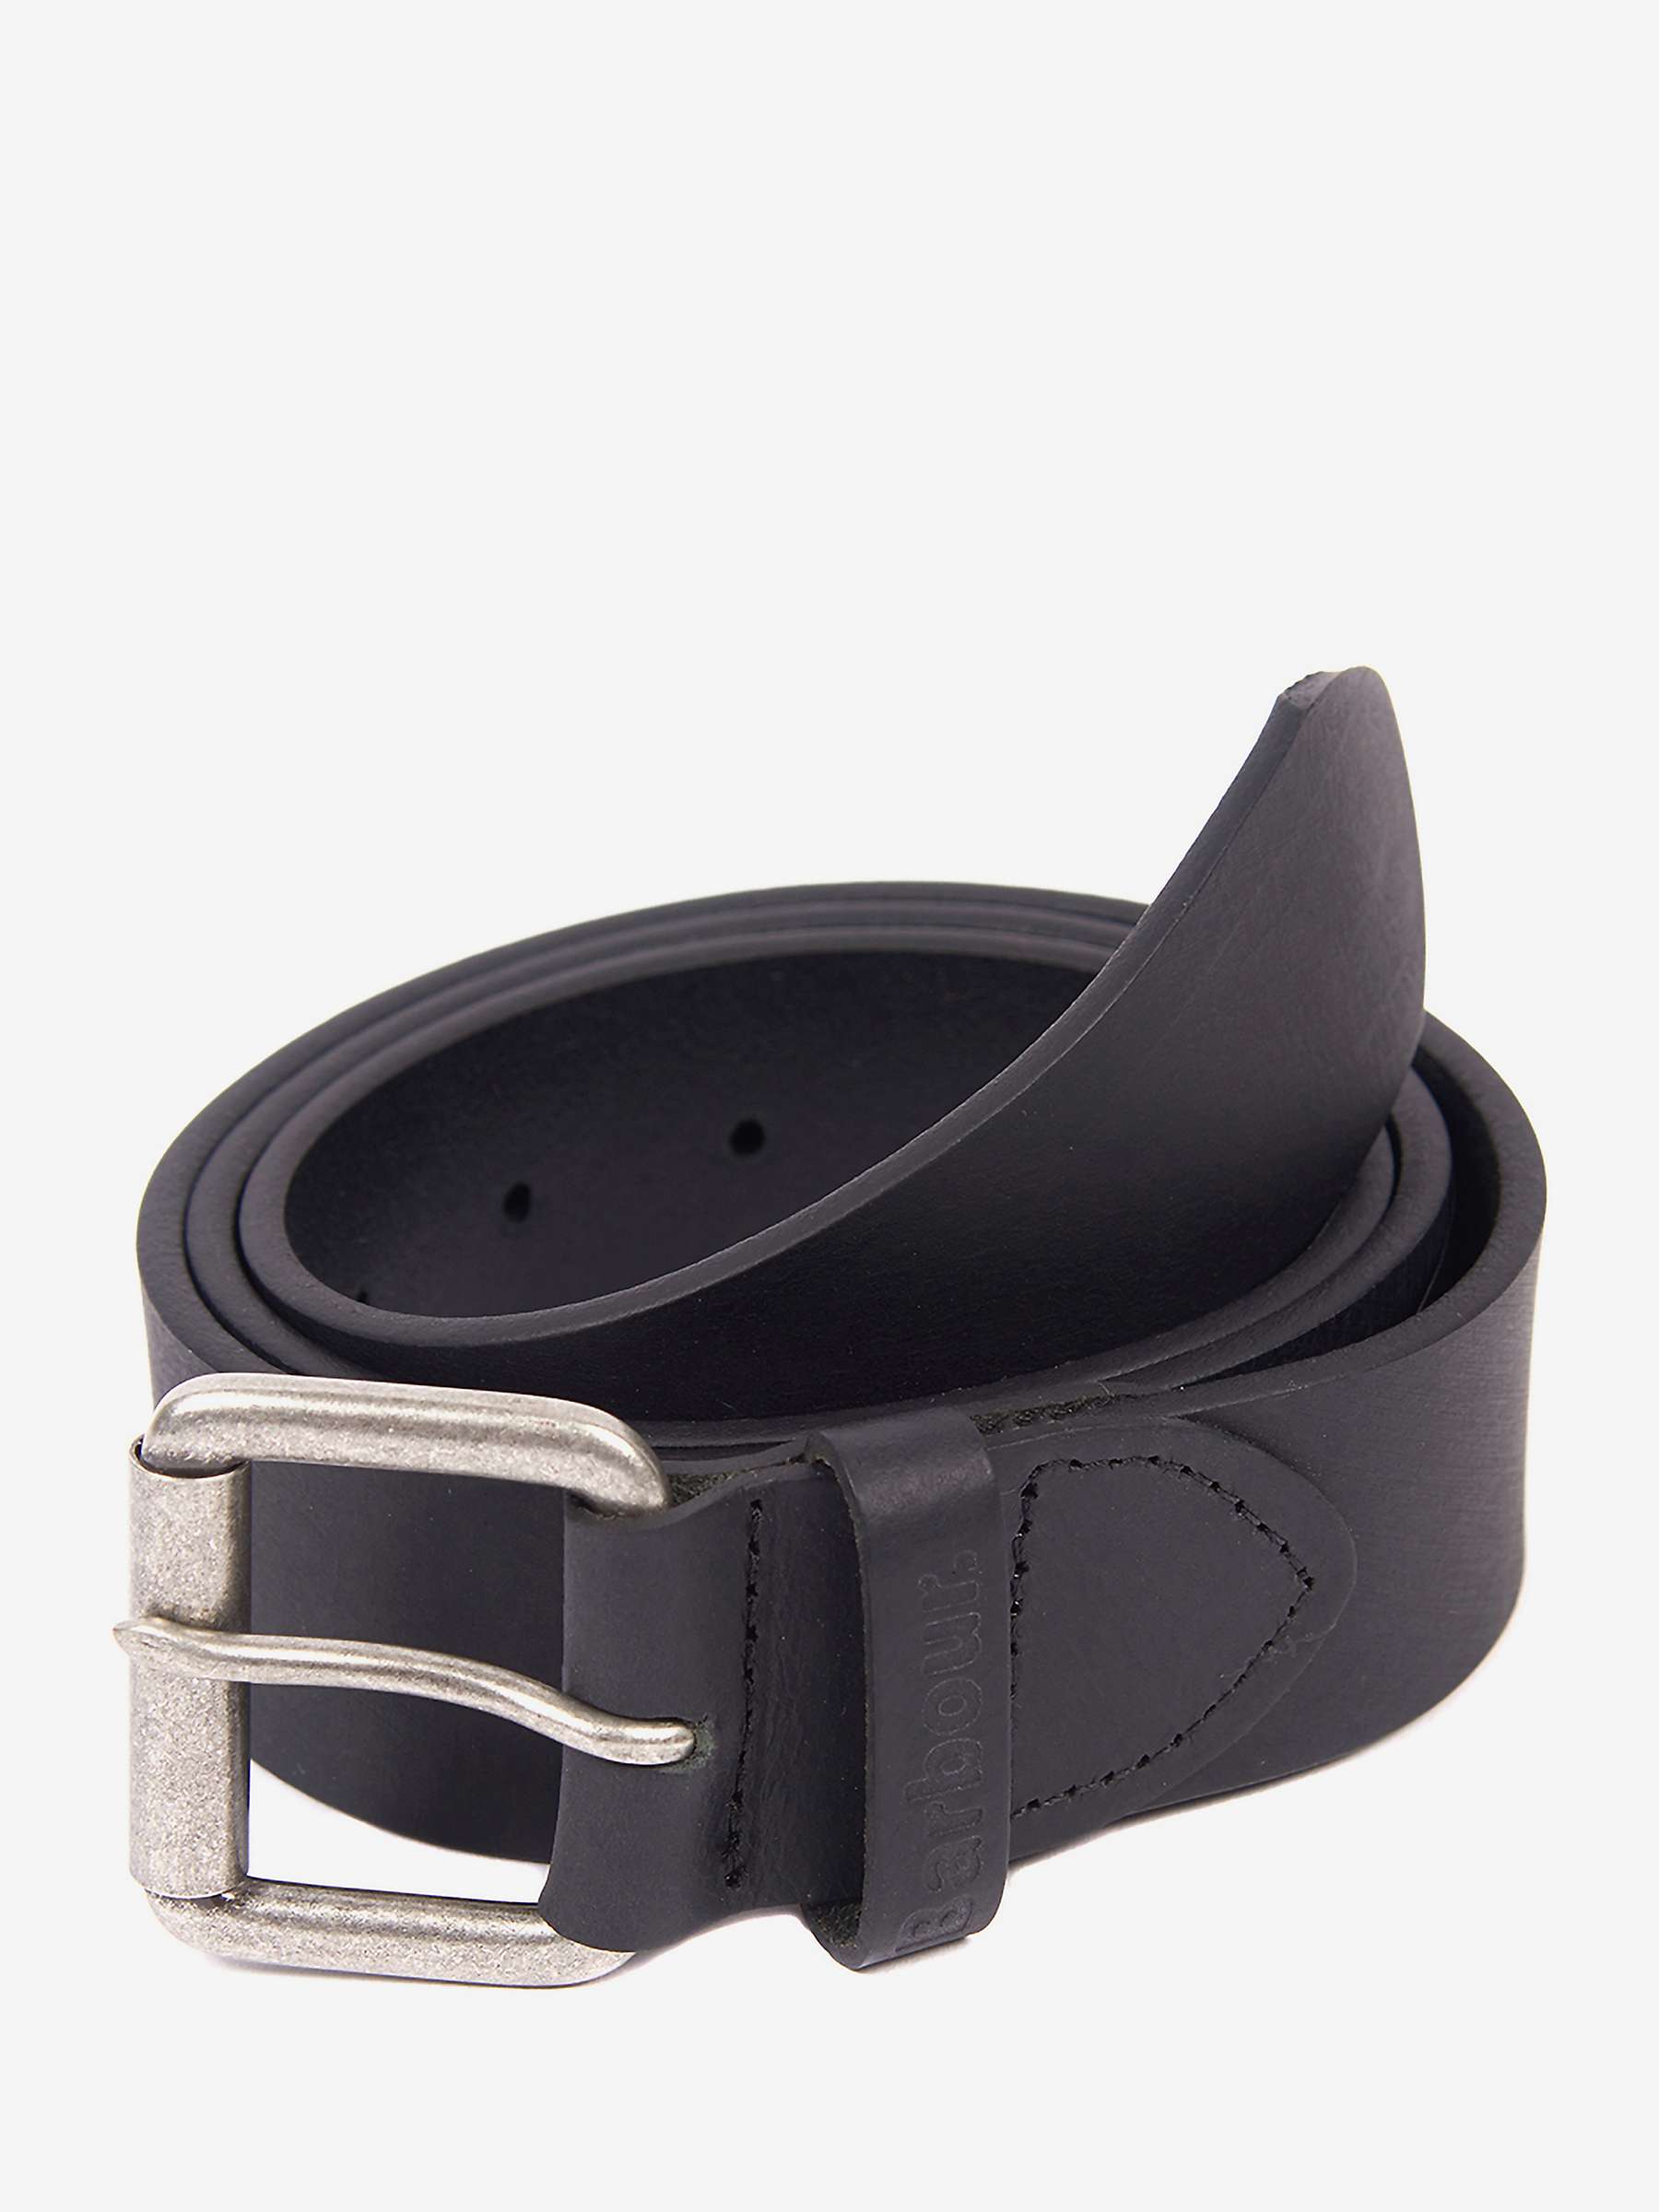 Buy Barbour Matt Leather Belt, Brown Online at johnlewis.com